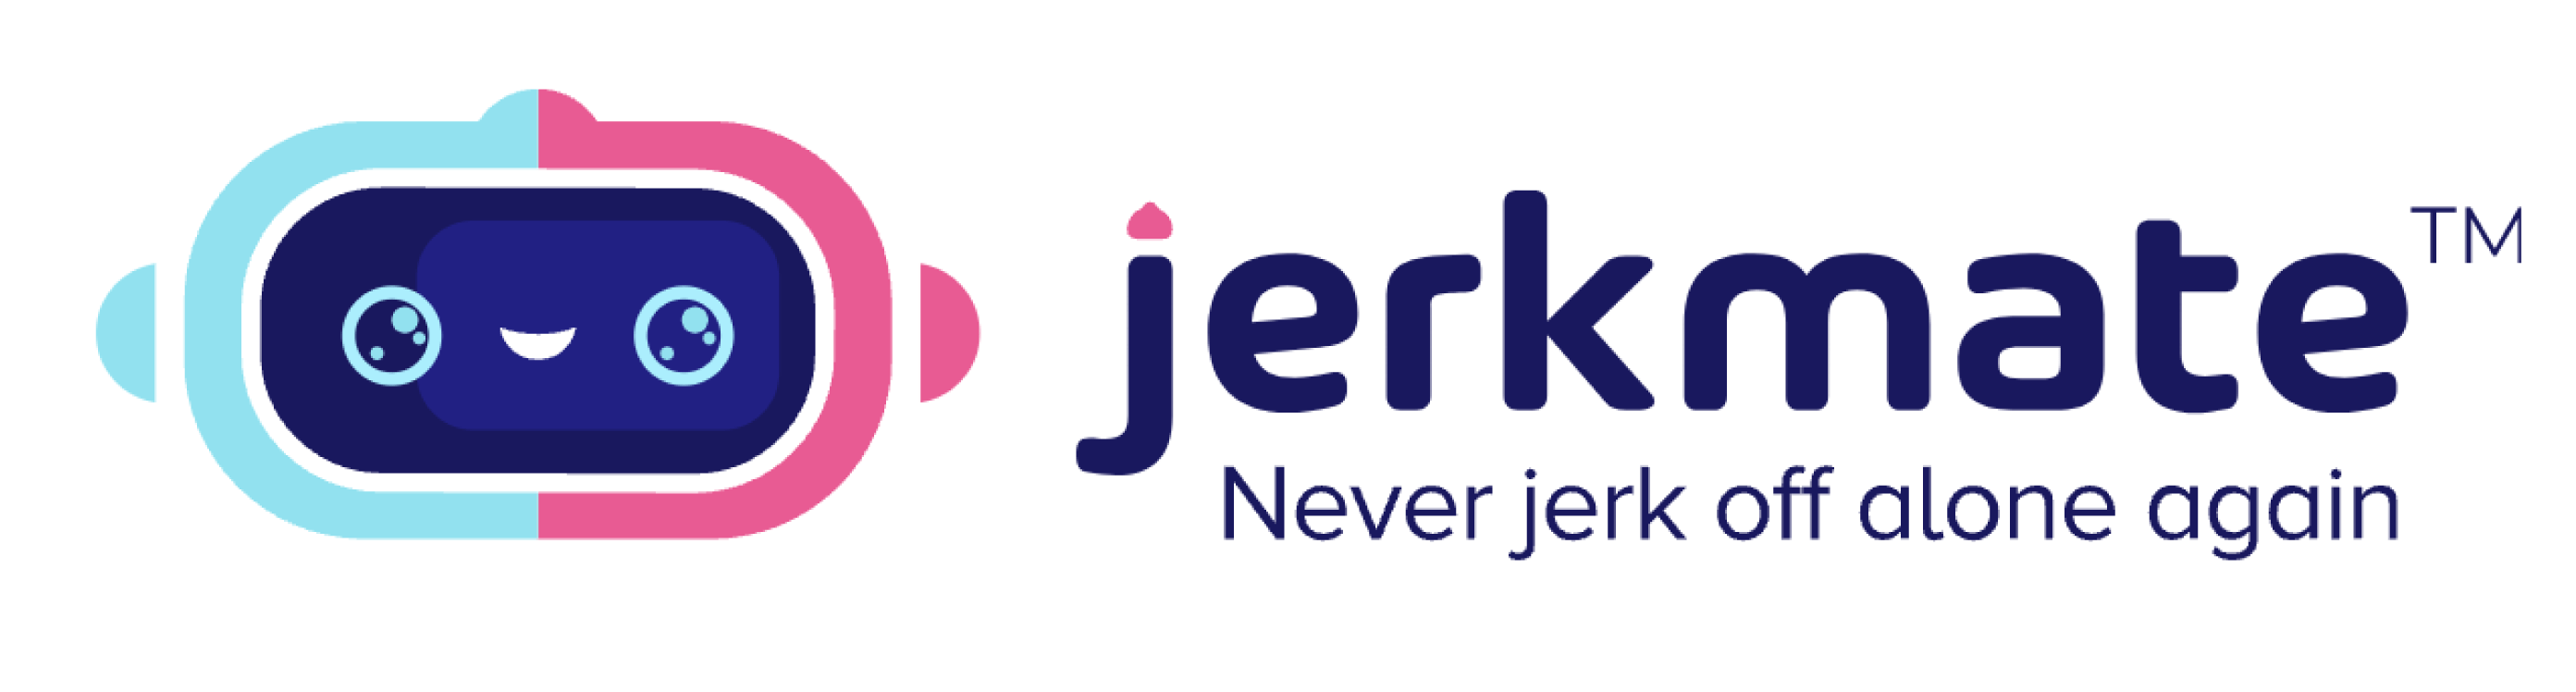 jerkmate cam site logo